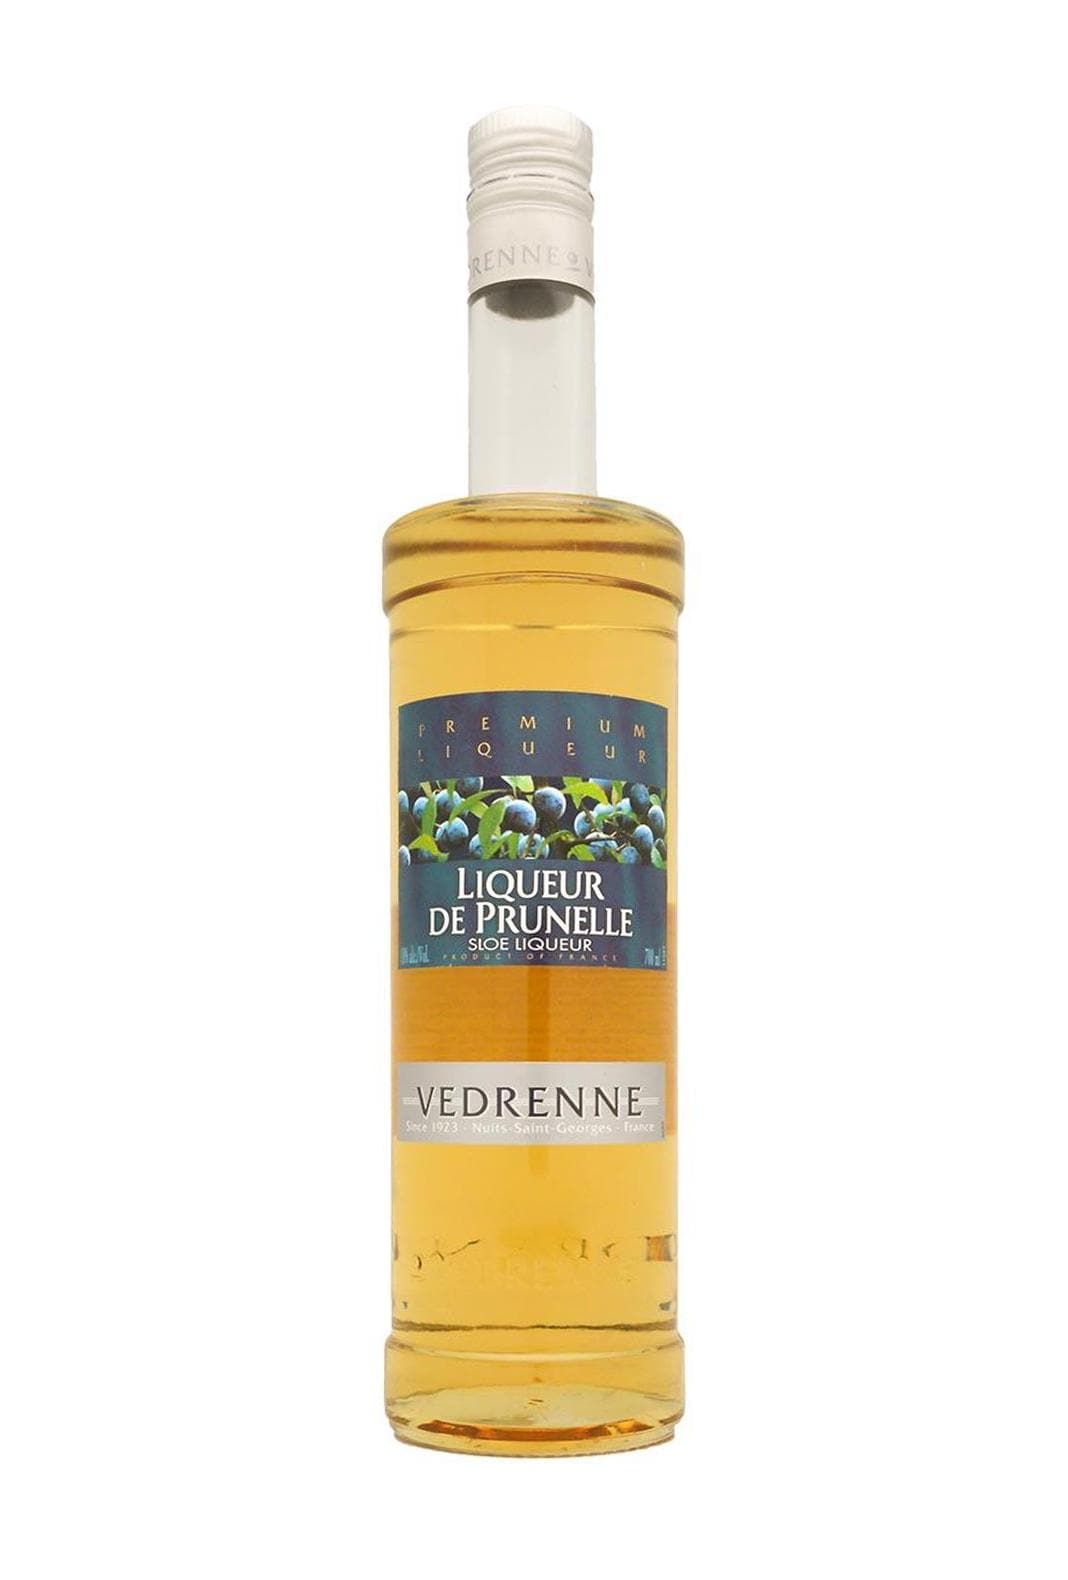 Vedrenne Liqueur de Prunelle (Sloe Berry) 18% 700m | Liqueurs | Shop online at Spirits of France